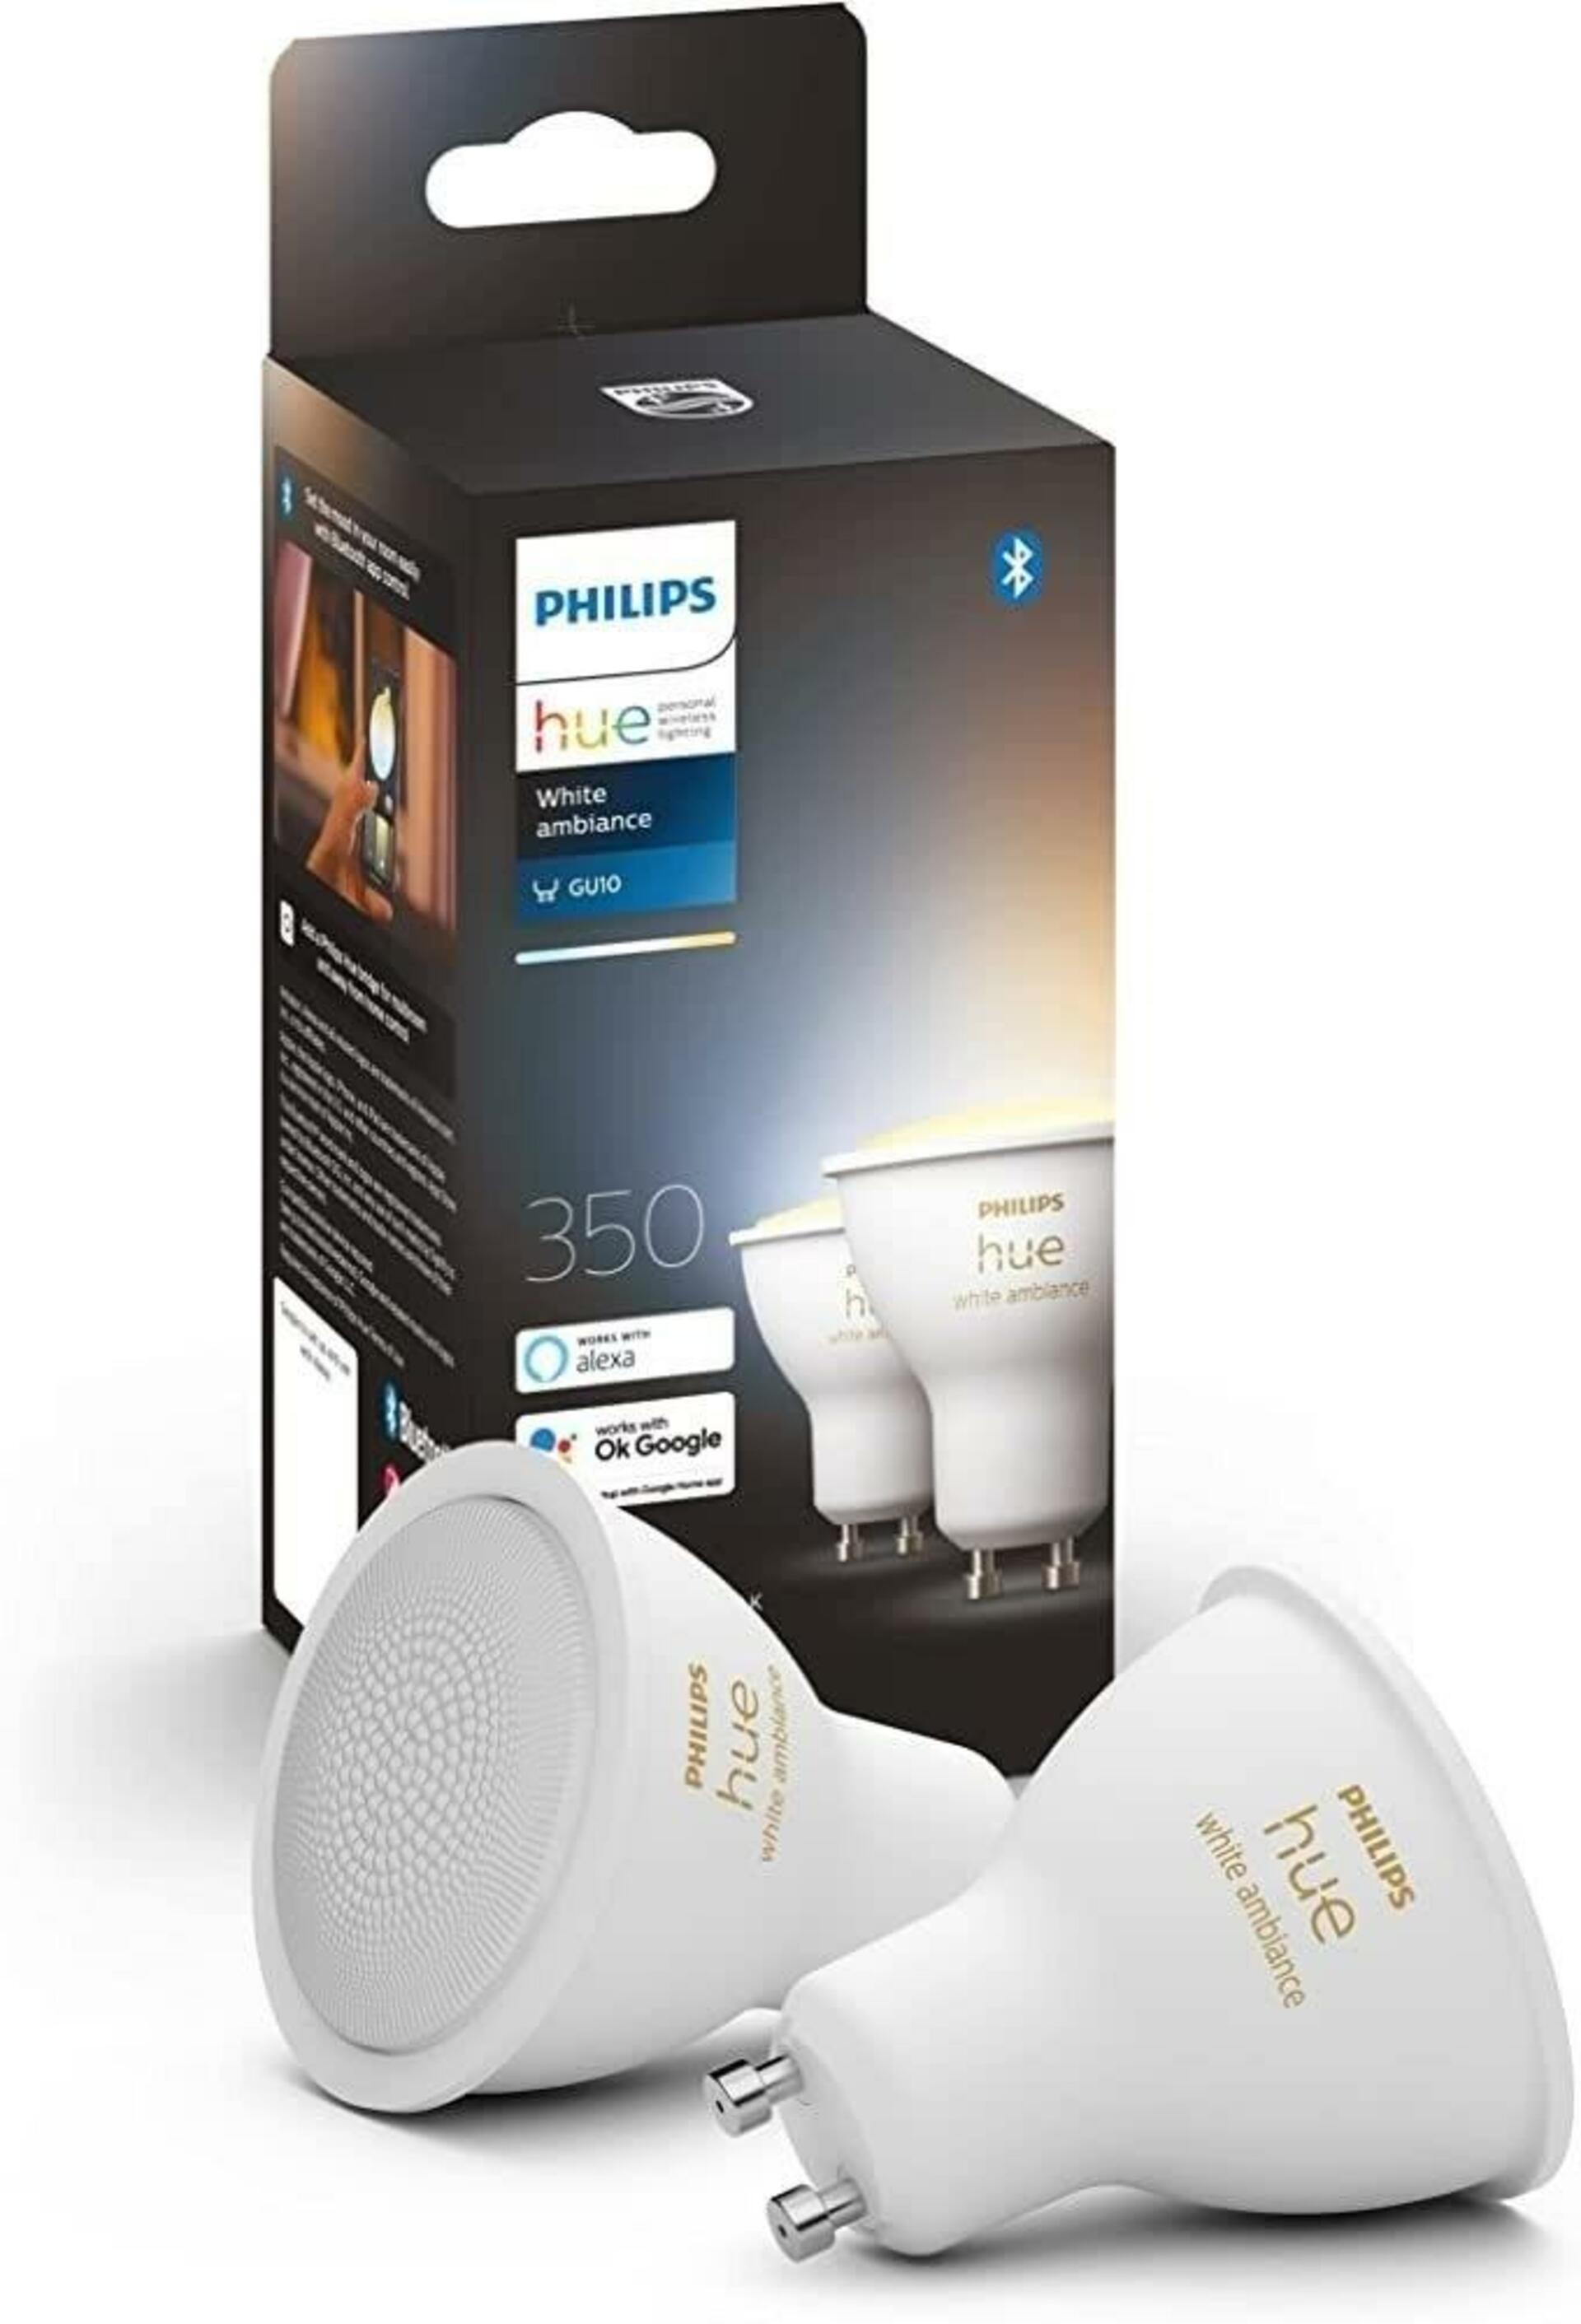 PHILIPS HUE Hue Bluetooth LED White Ambiance set 2ks žárovek Philips 8719514340121 GU10 2x4,3W 2x350lm 2200-6500K bílé stmívatelné